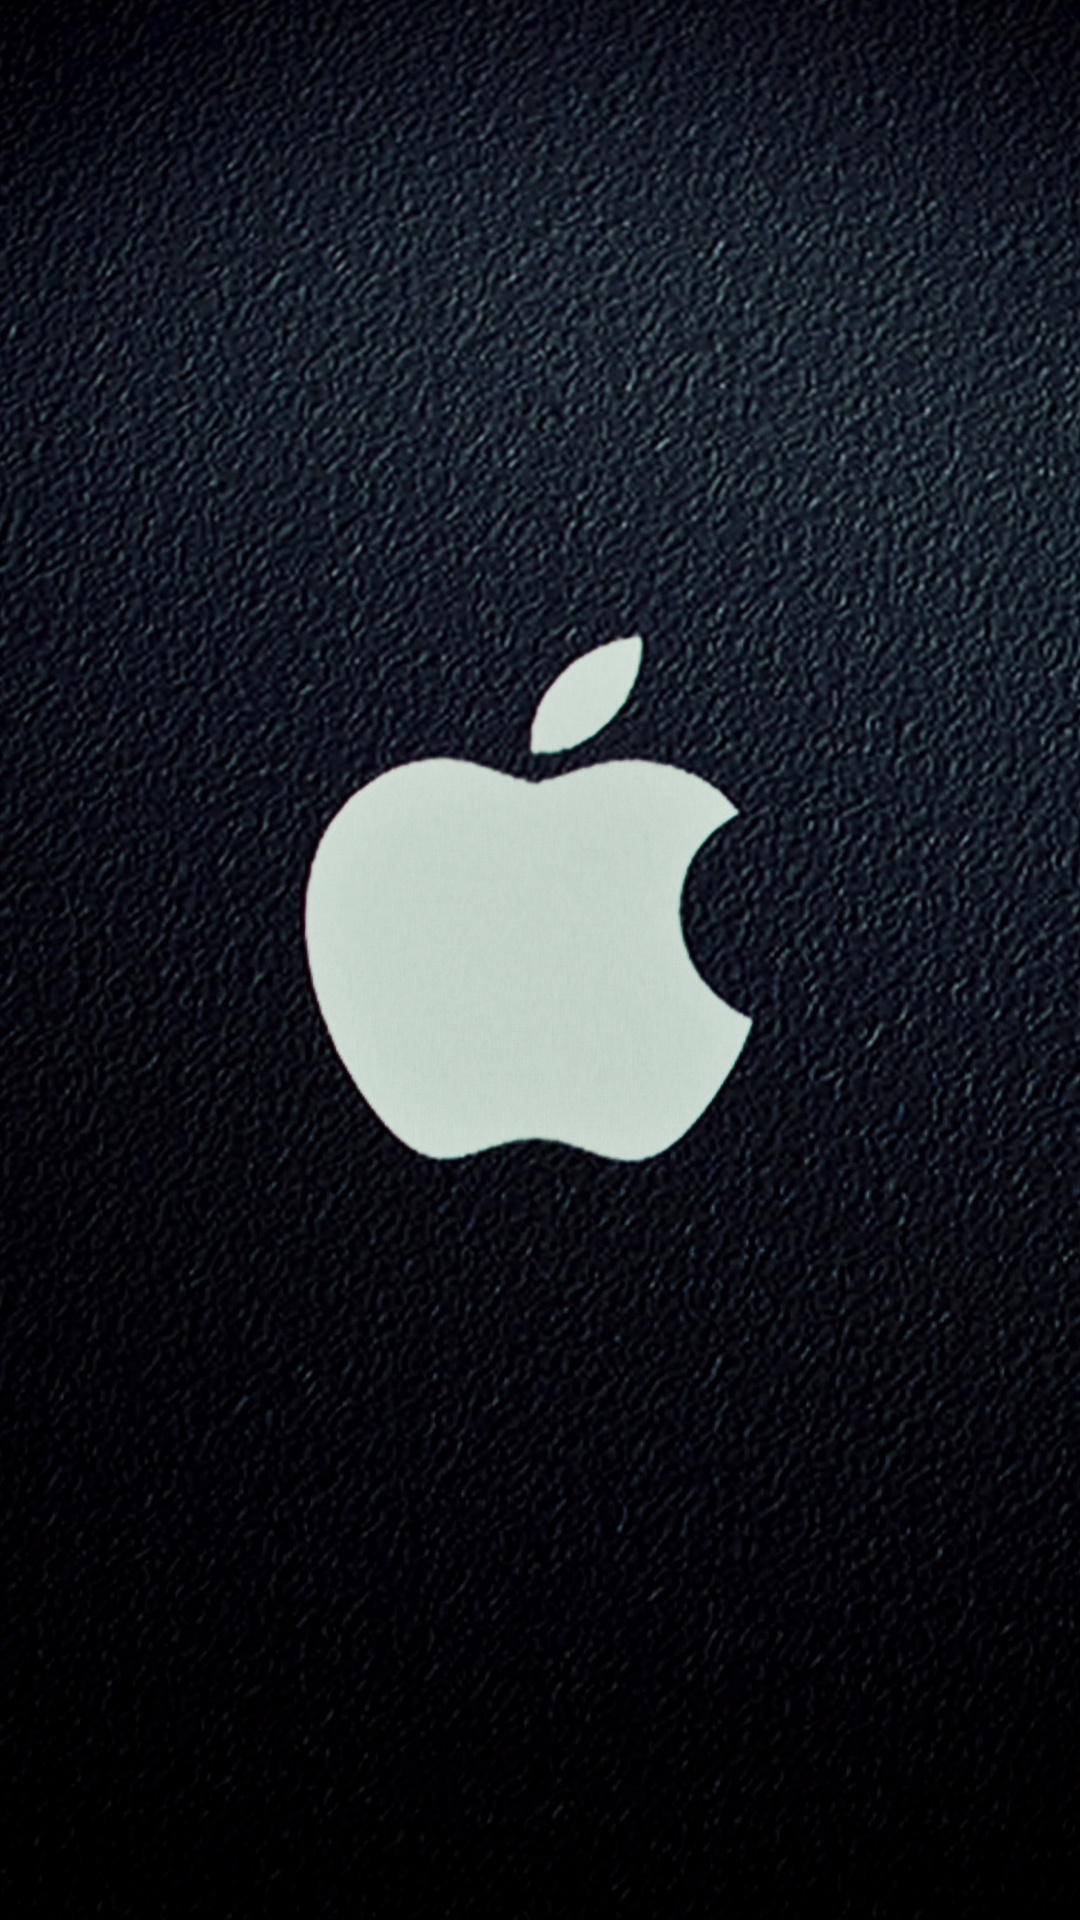 Apple, Logo, Graphics, Black, Smartphone. Wallpaper in 1080x1920 Resolution